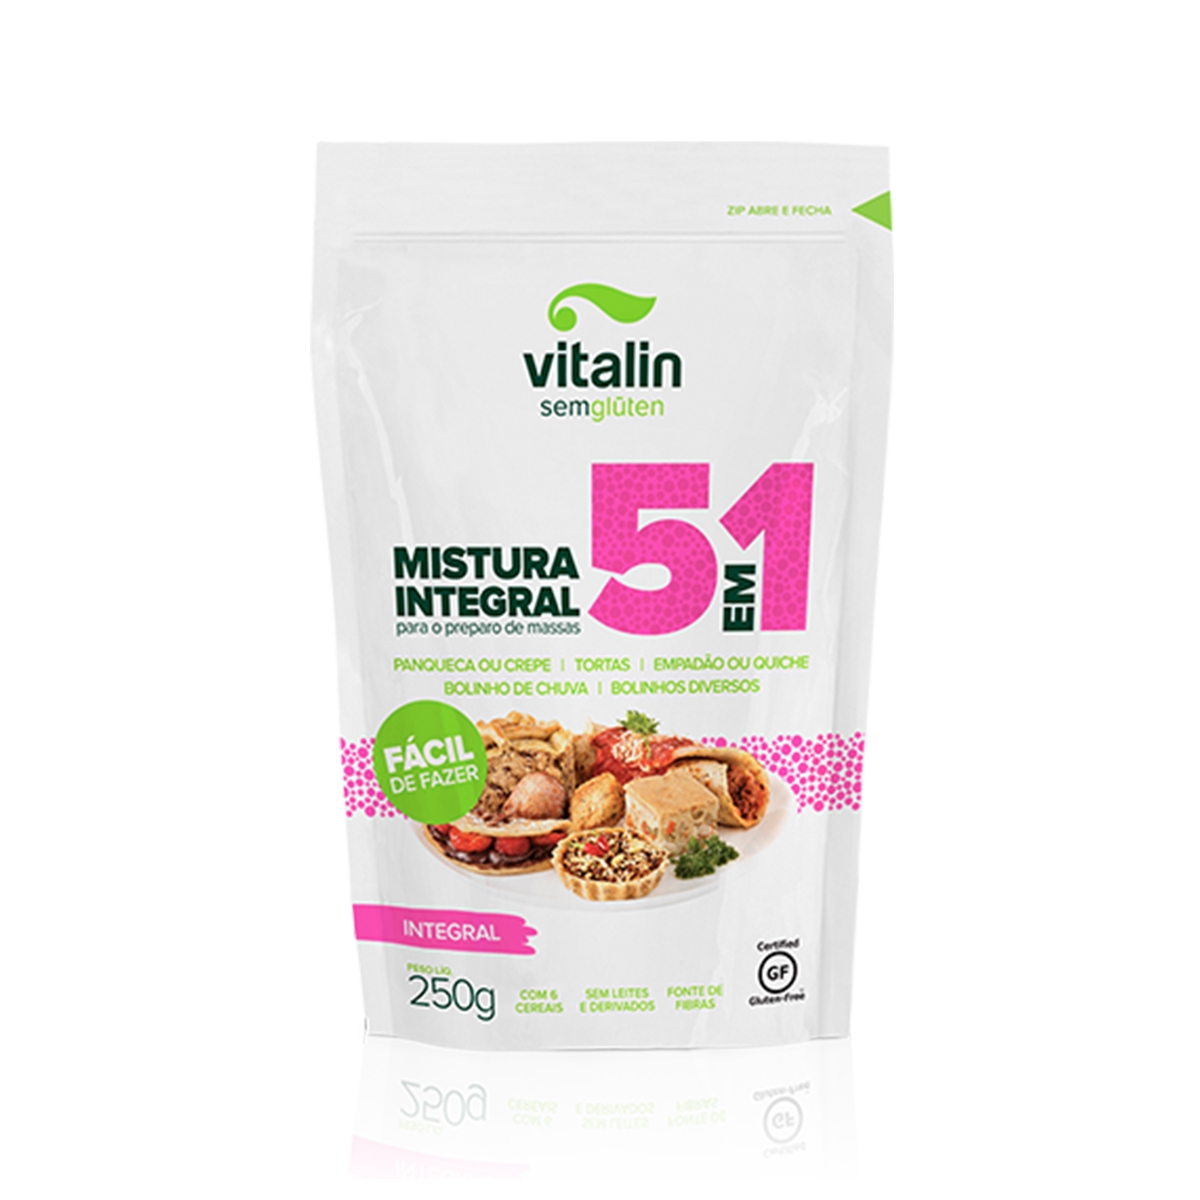 Mistura Integral para Preparo de Massas 5 em 1 glúten 250g - Vitalin